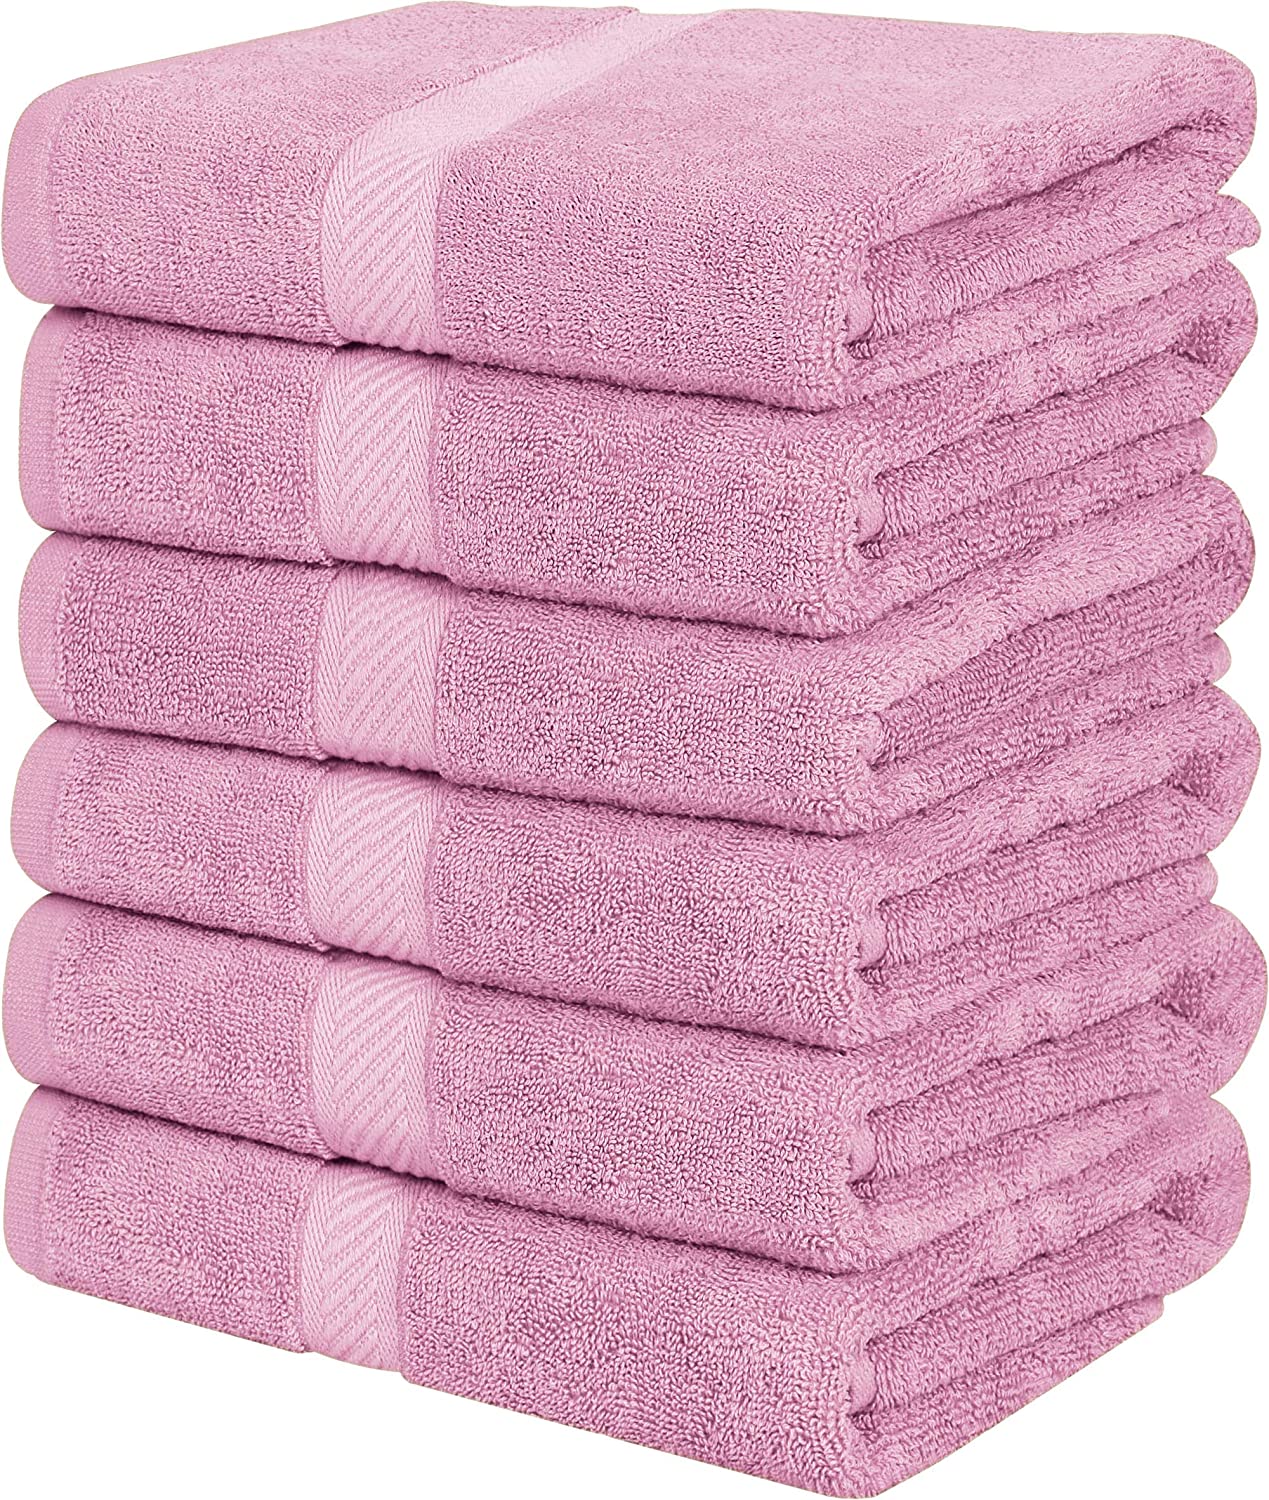 6 Pack Premium Large Bath Towels Cotton 24 x 48 inch Brown & Gray Color.